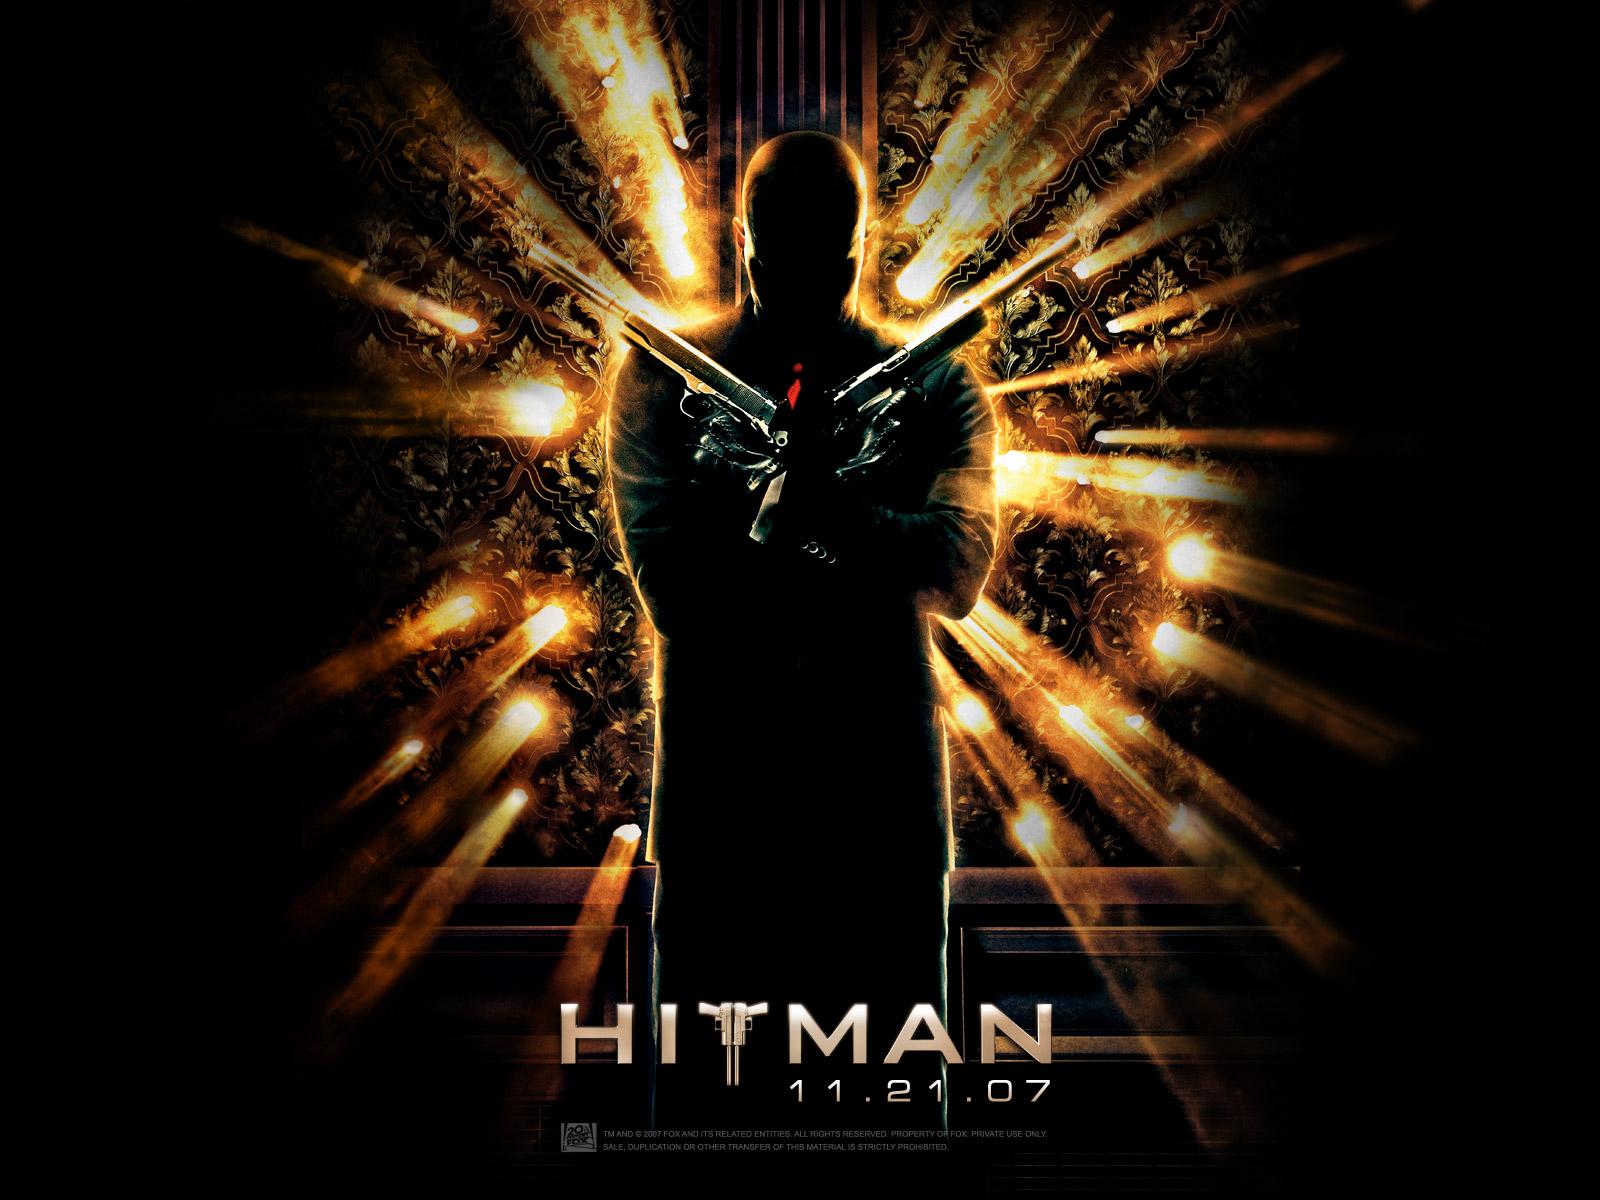 hitman iphone wallpaper,darkness,graphic design,poster,album cover,movie